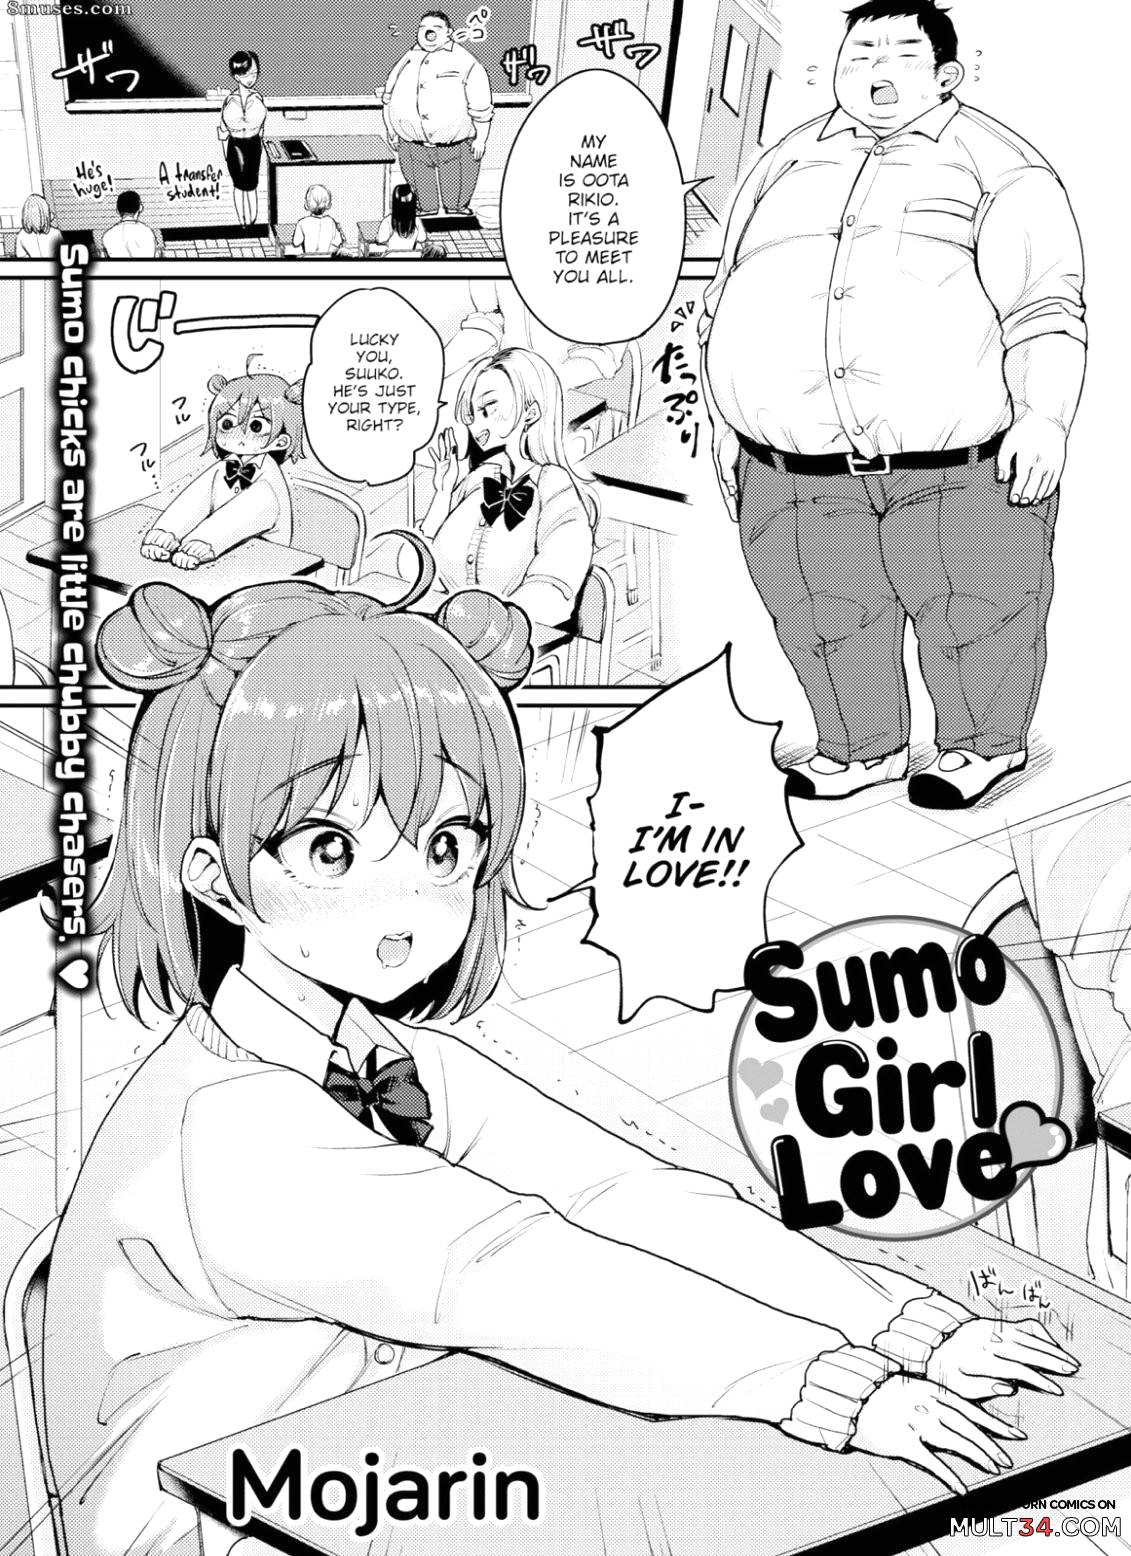 1131px x 1556px - Sumo Girl Love porn comic - the best cartoon porn comics, Rule 34 | MULT34